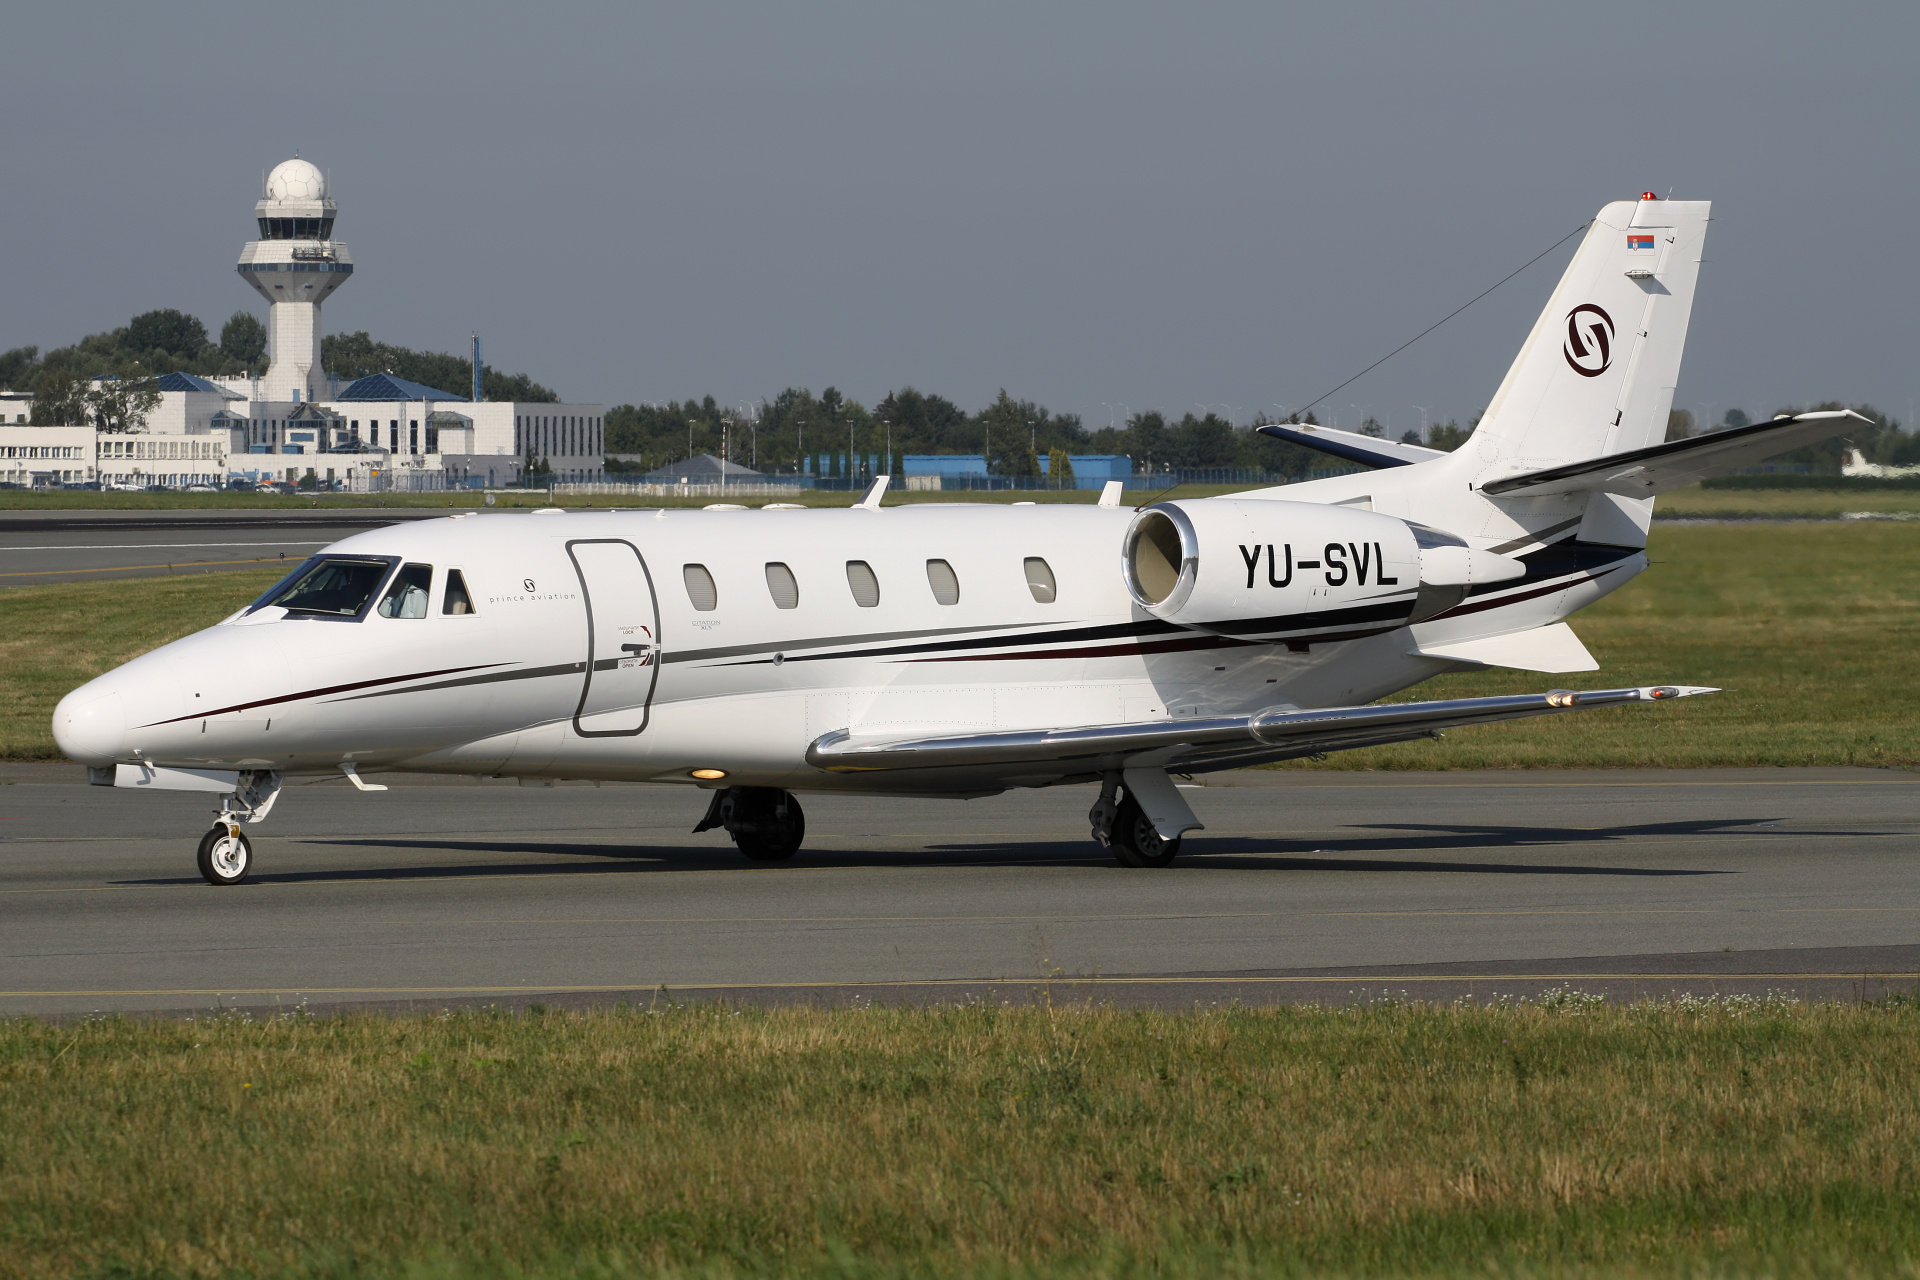 Citation XLS, YU-SVL, Prince Aviation (Aircraft » EPWA Spotting » Cessna 560XL)